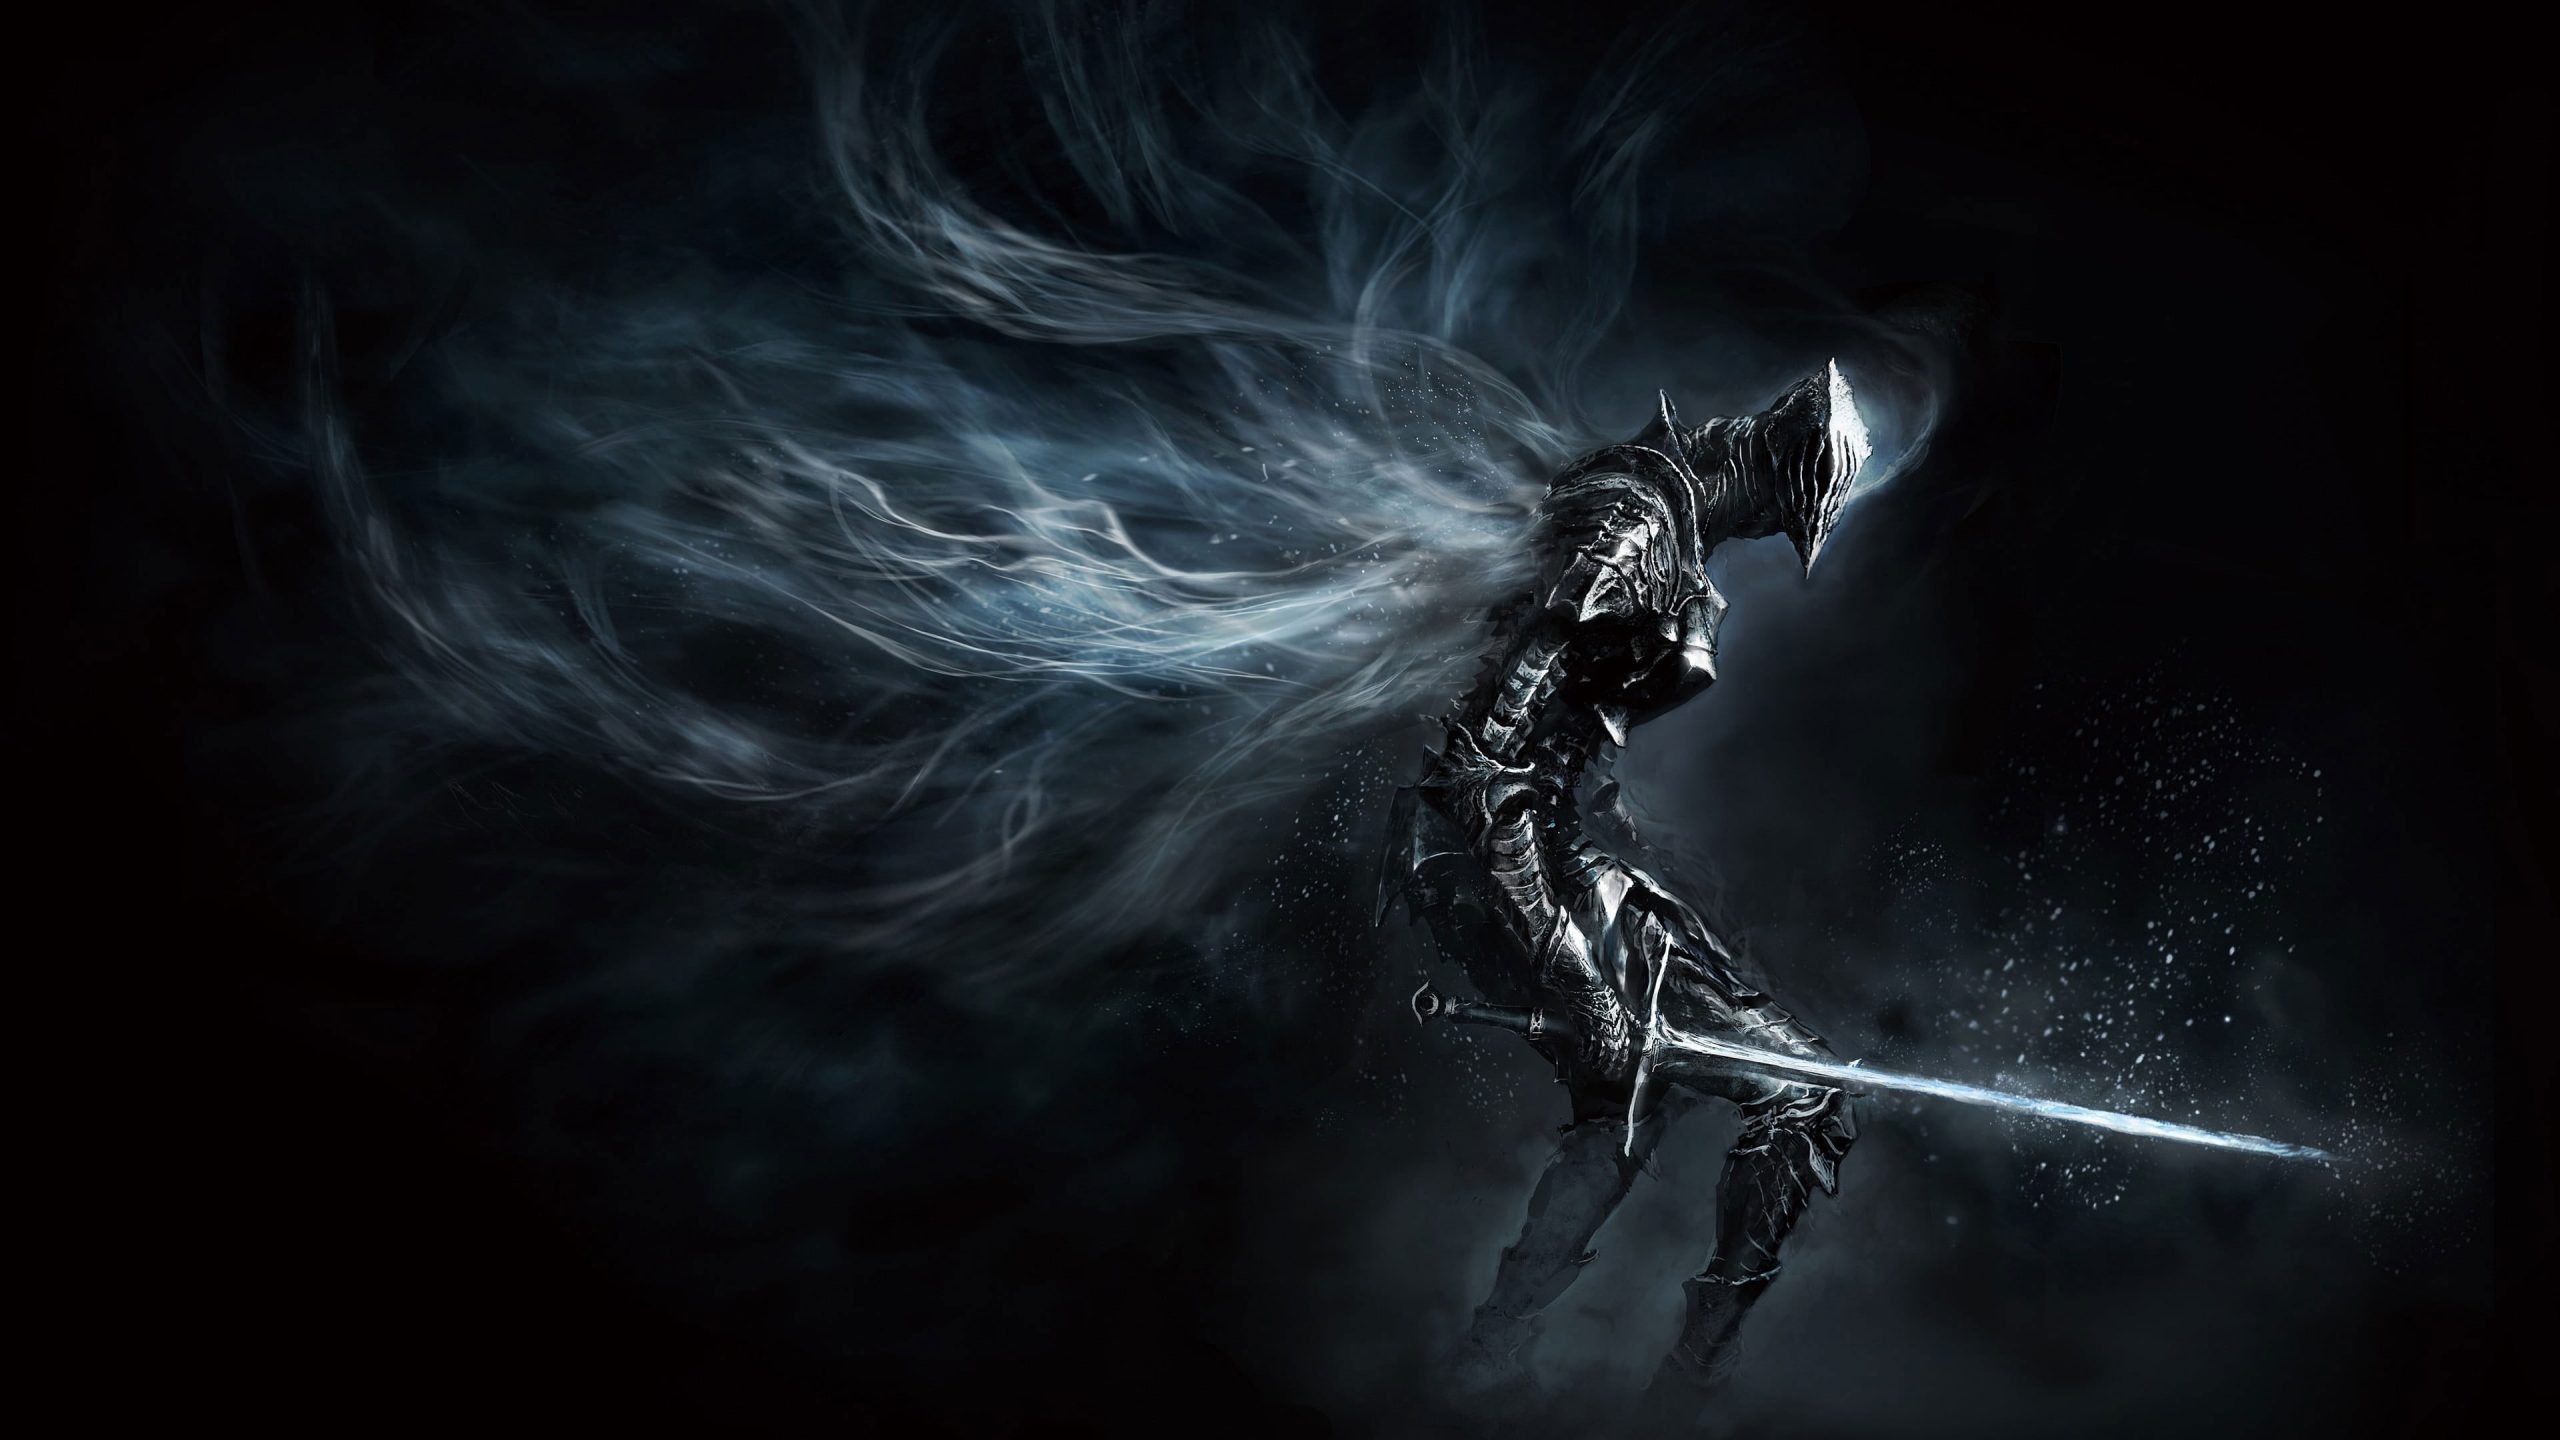 Dark Souls game wallpaper, character holding sword poster